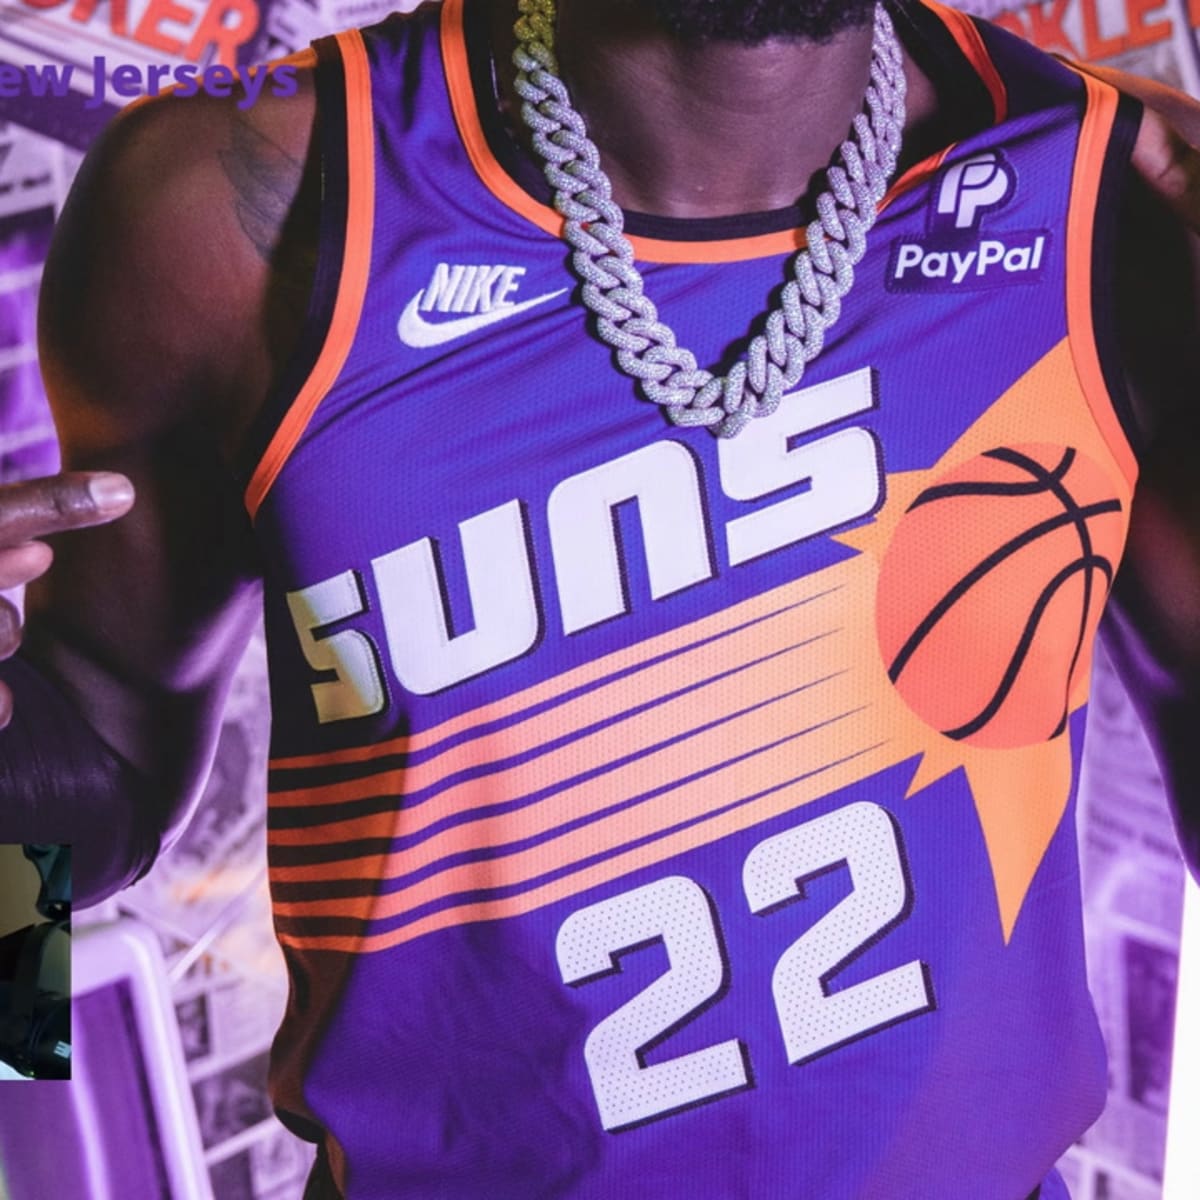 Lakers unveil new purple statement jerseys for 2022-23 season